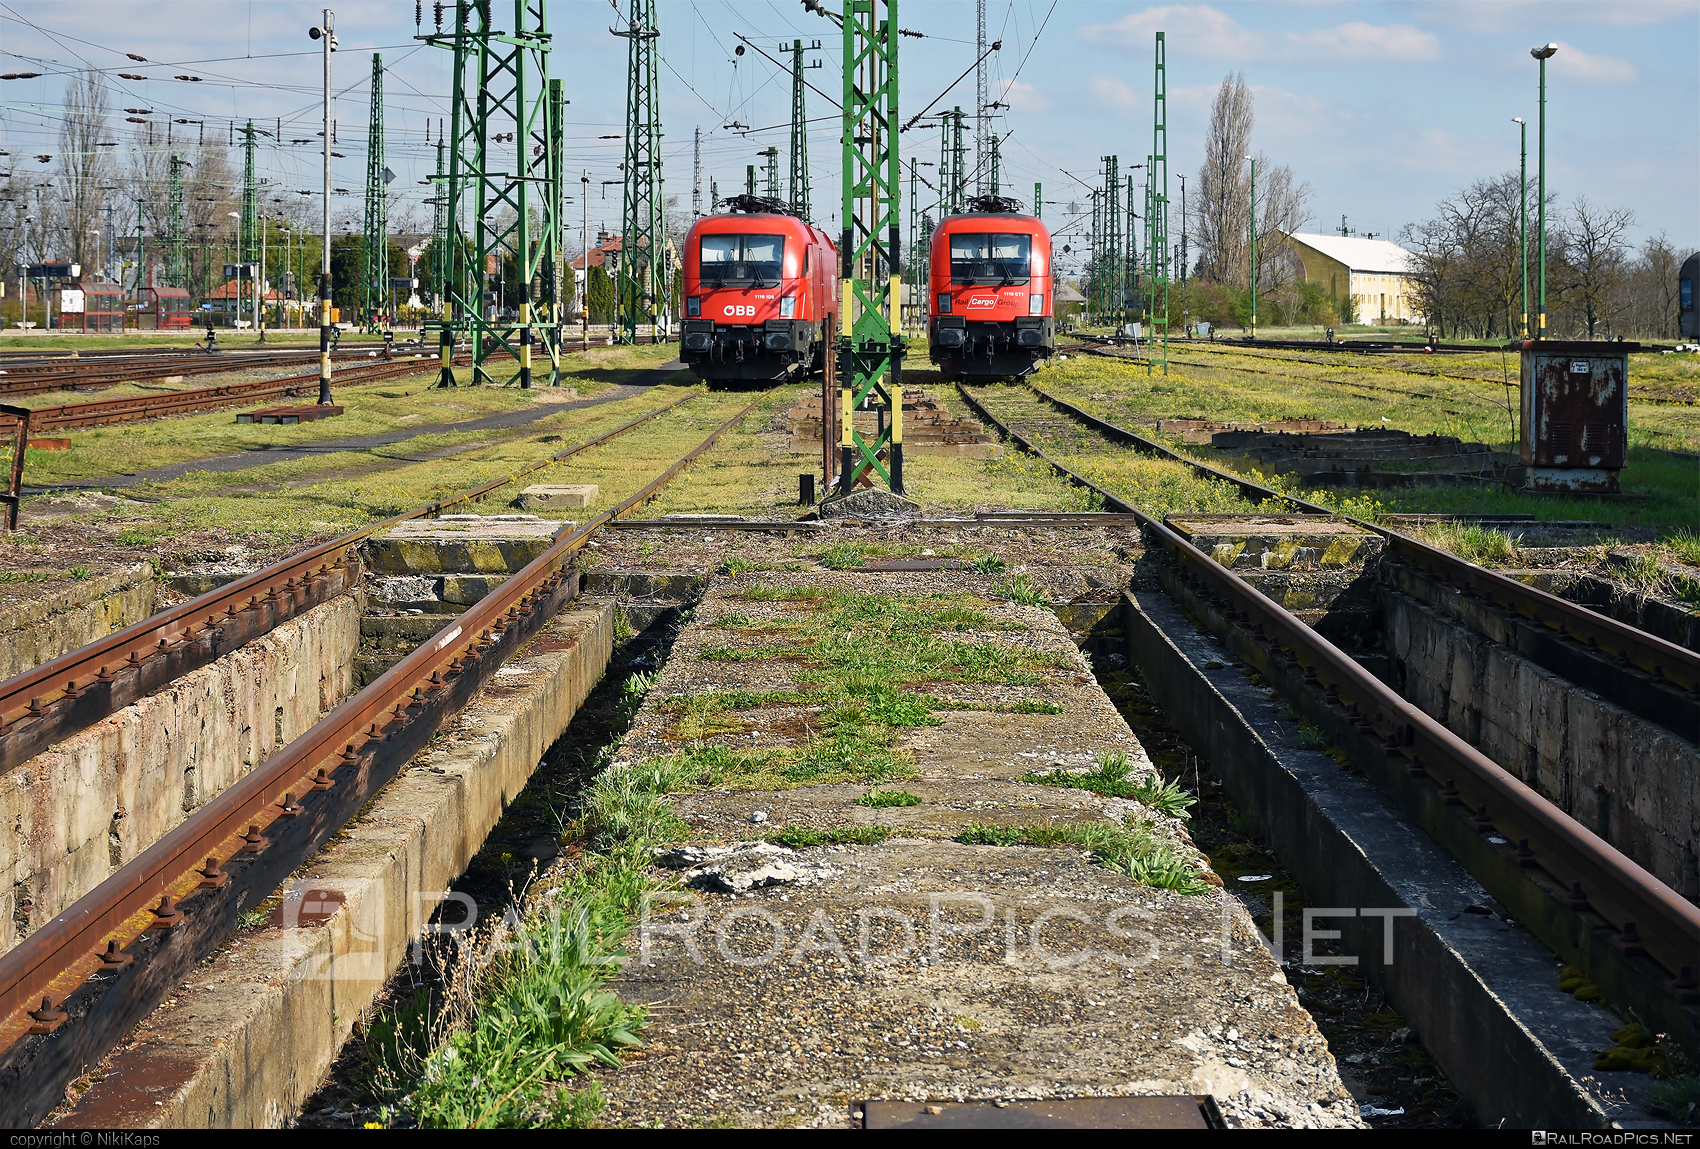 Siemens ES 64 U2 - 1116 071 operated by Rail Cargo Hungaria ZRt. #es64 #es64u2 #eurosprinter #obb #osterreichischebundesbahnen #rch #siemens #siemensEs64 #siemensEs64u2 #siemenstaurus #taurus #tauruslocomotive